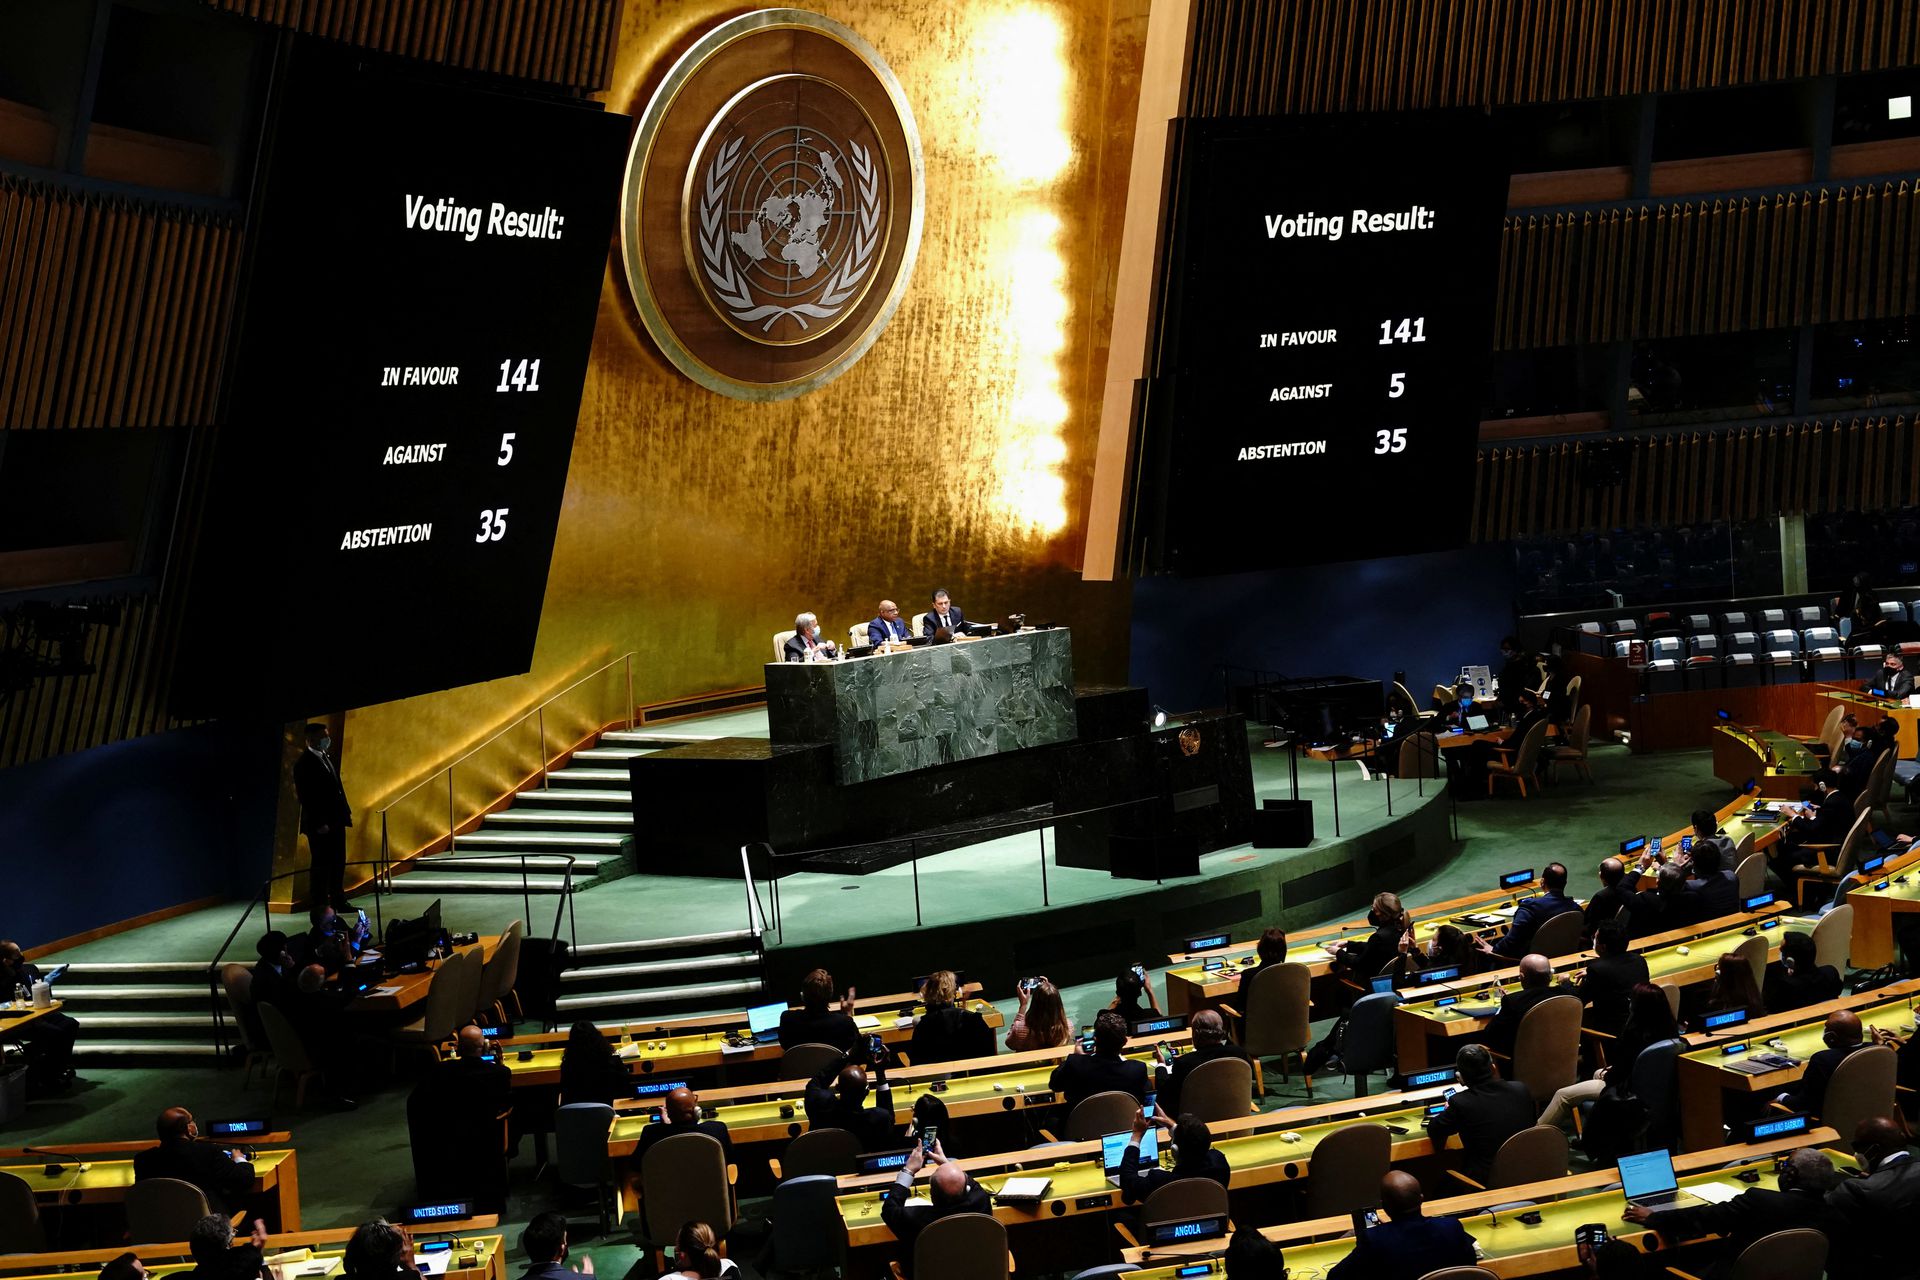 UN General Assembly to vote again on Ukraine: spokesperson